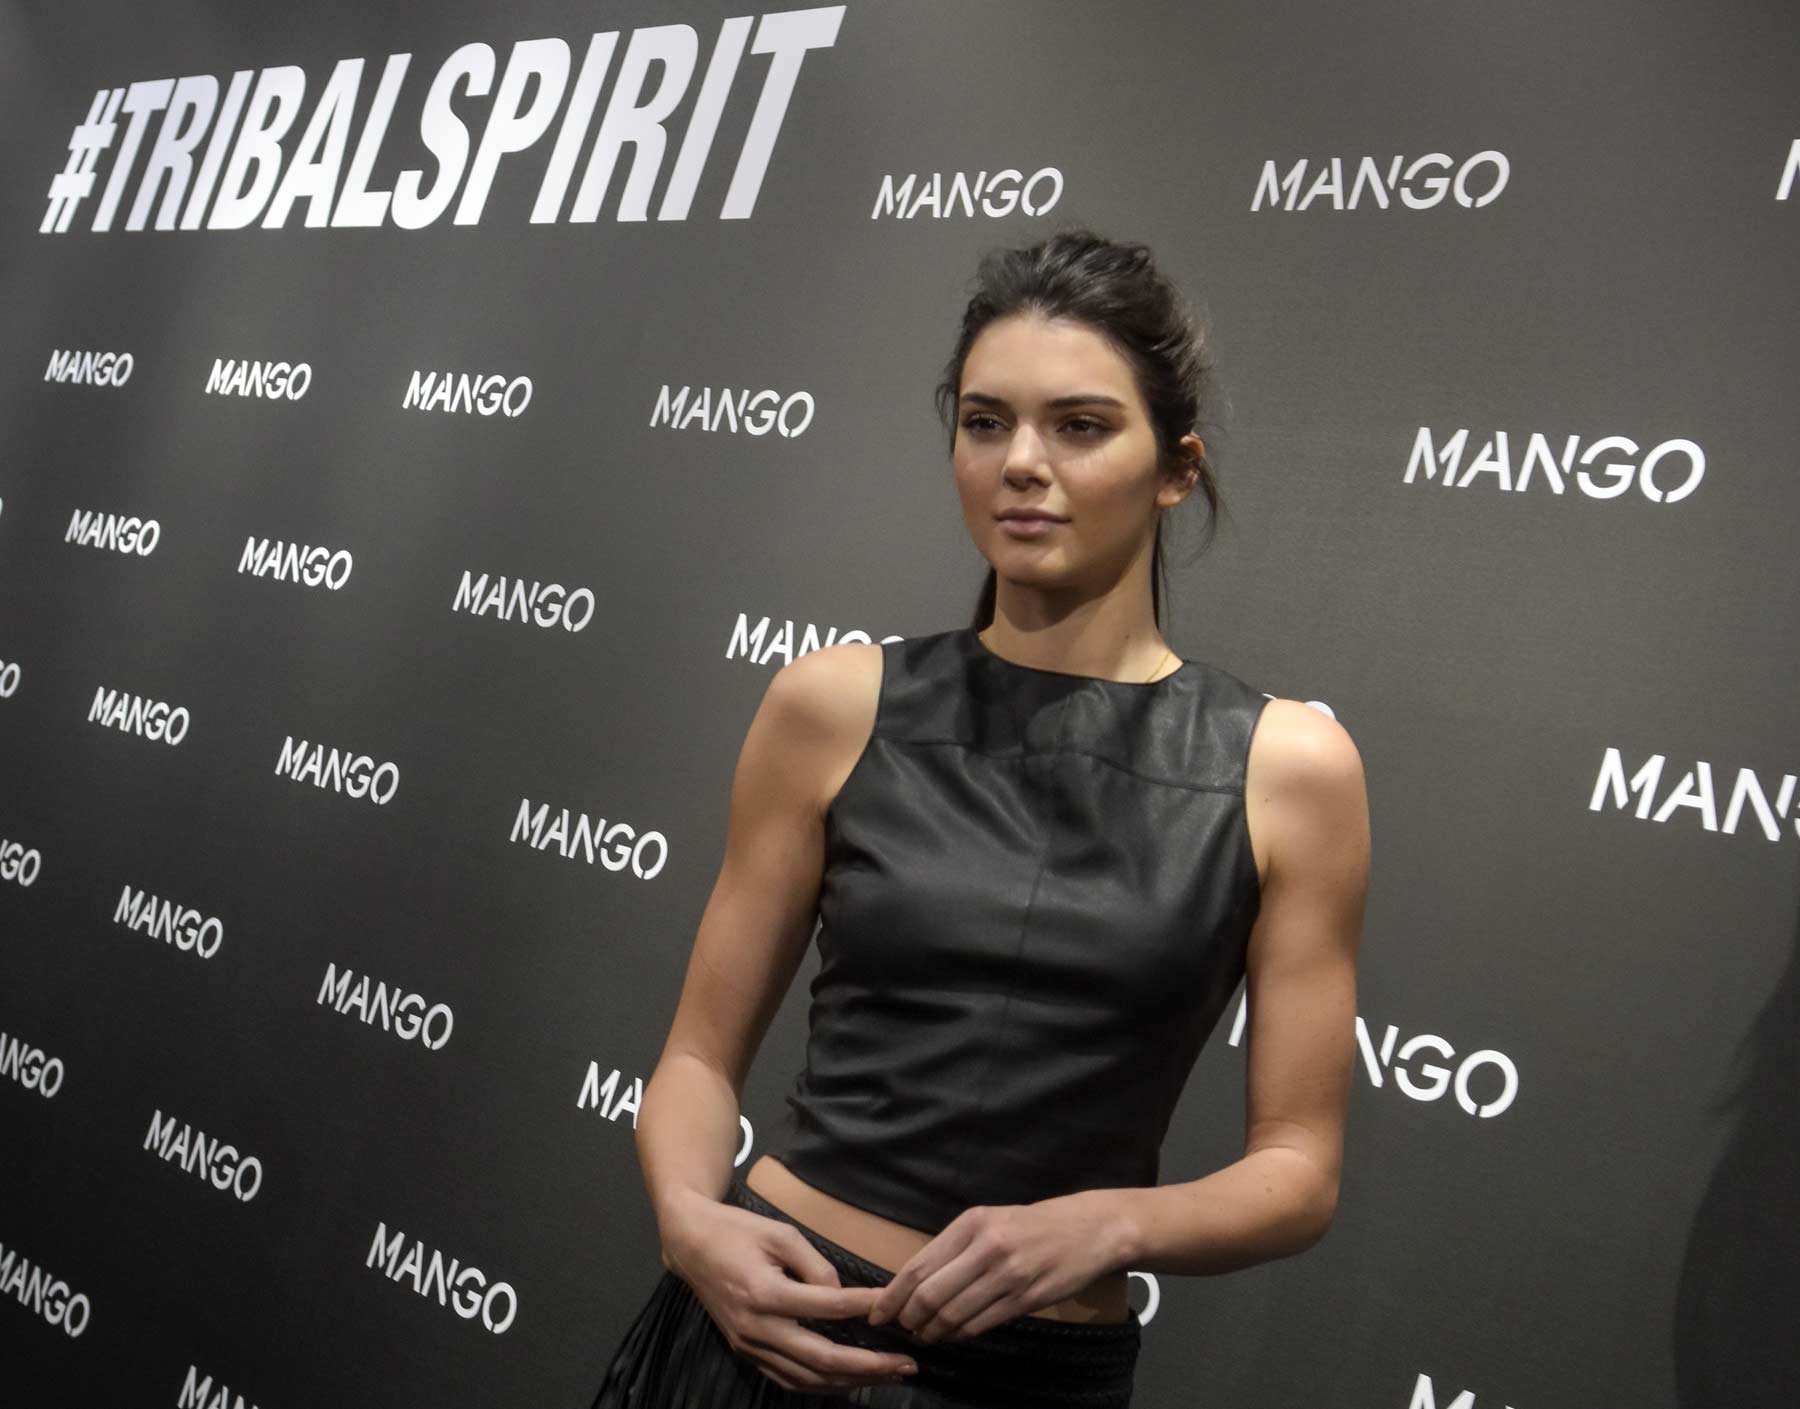 Kendall Jenner attends Mango Tribal Spirit party